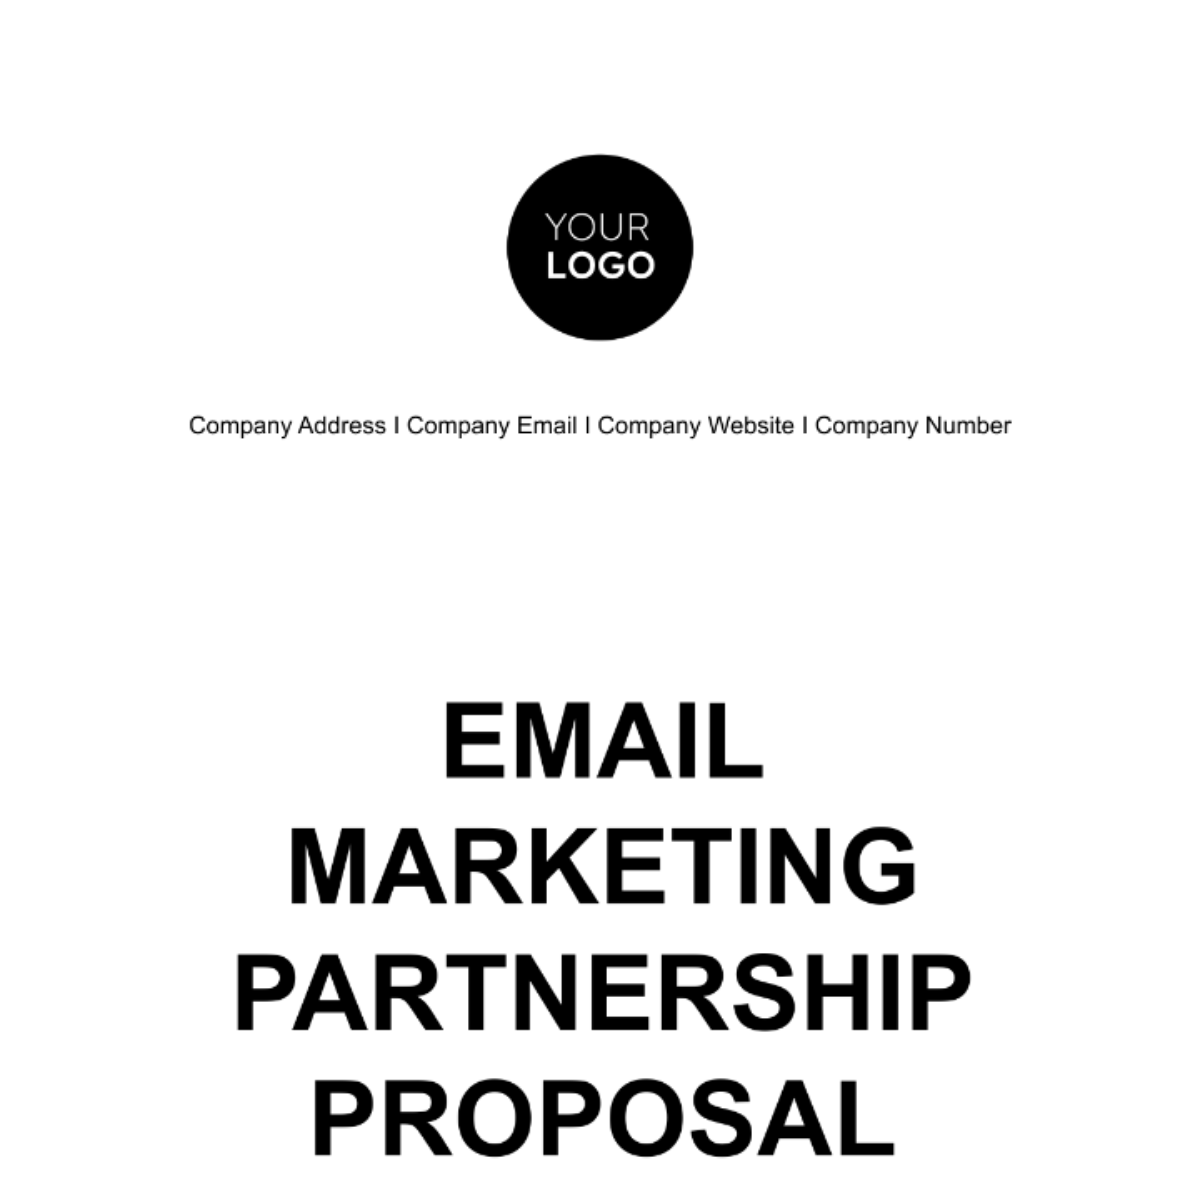 Free Email Marketing Partnership Proposal Template